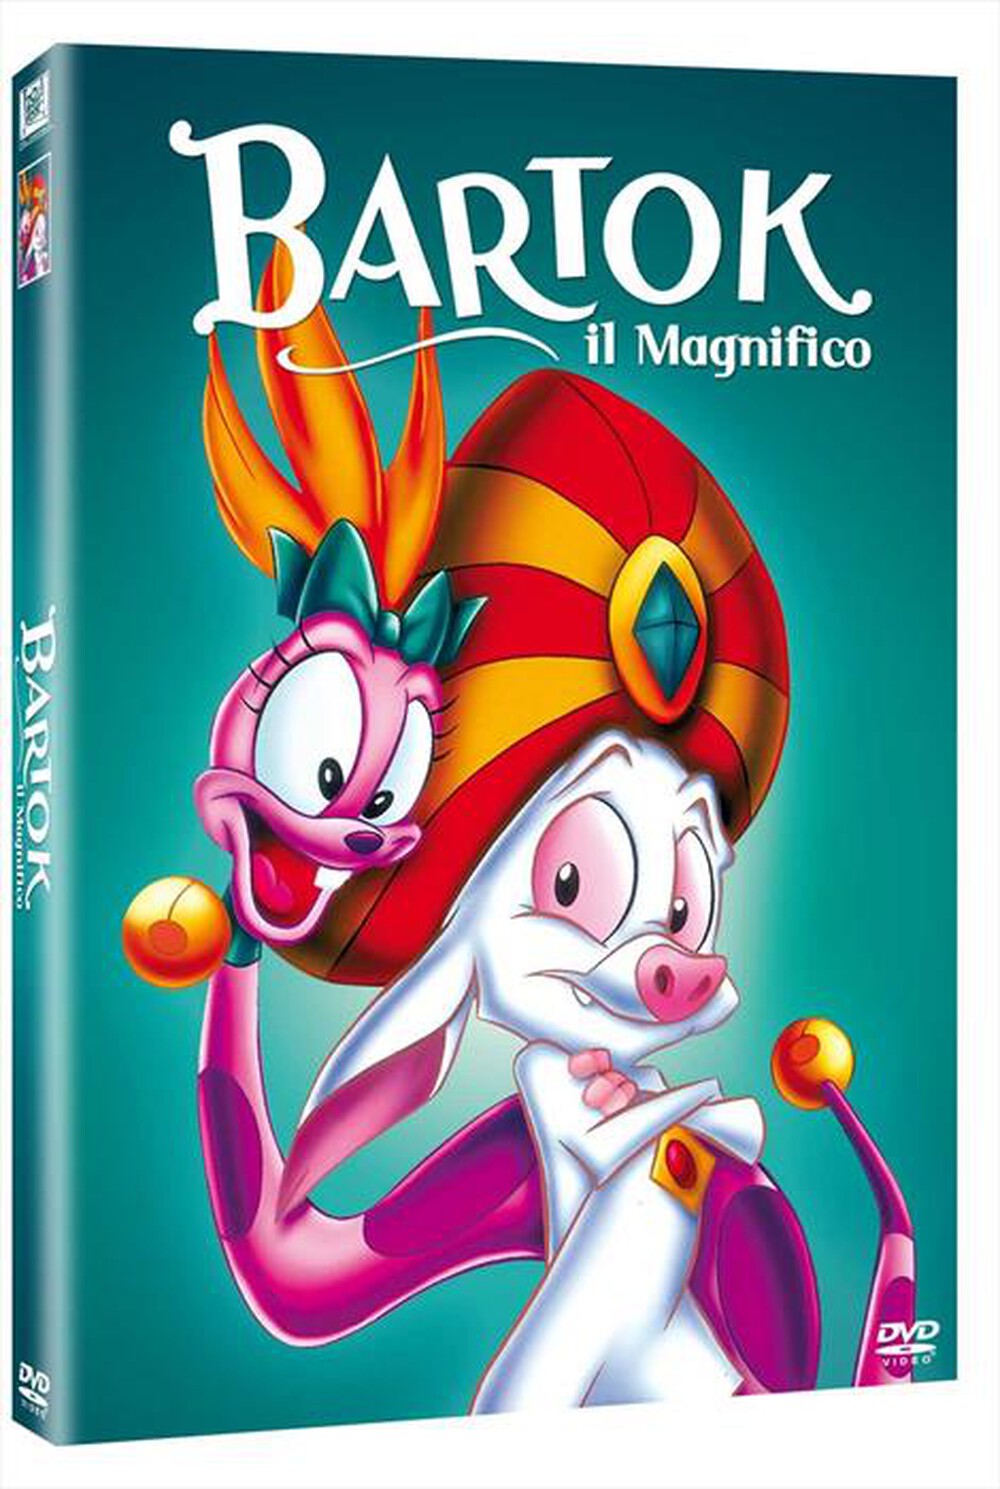 "WALT DISNEY - Bartok - Il Magnifico (Funtastic Edition) - "